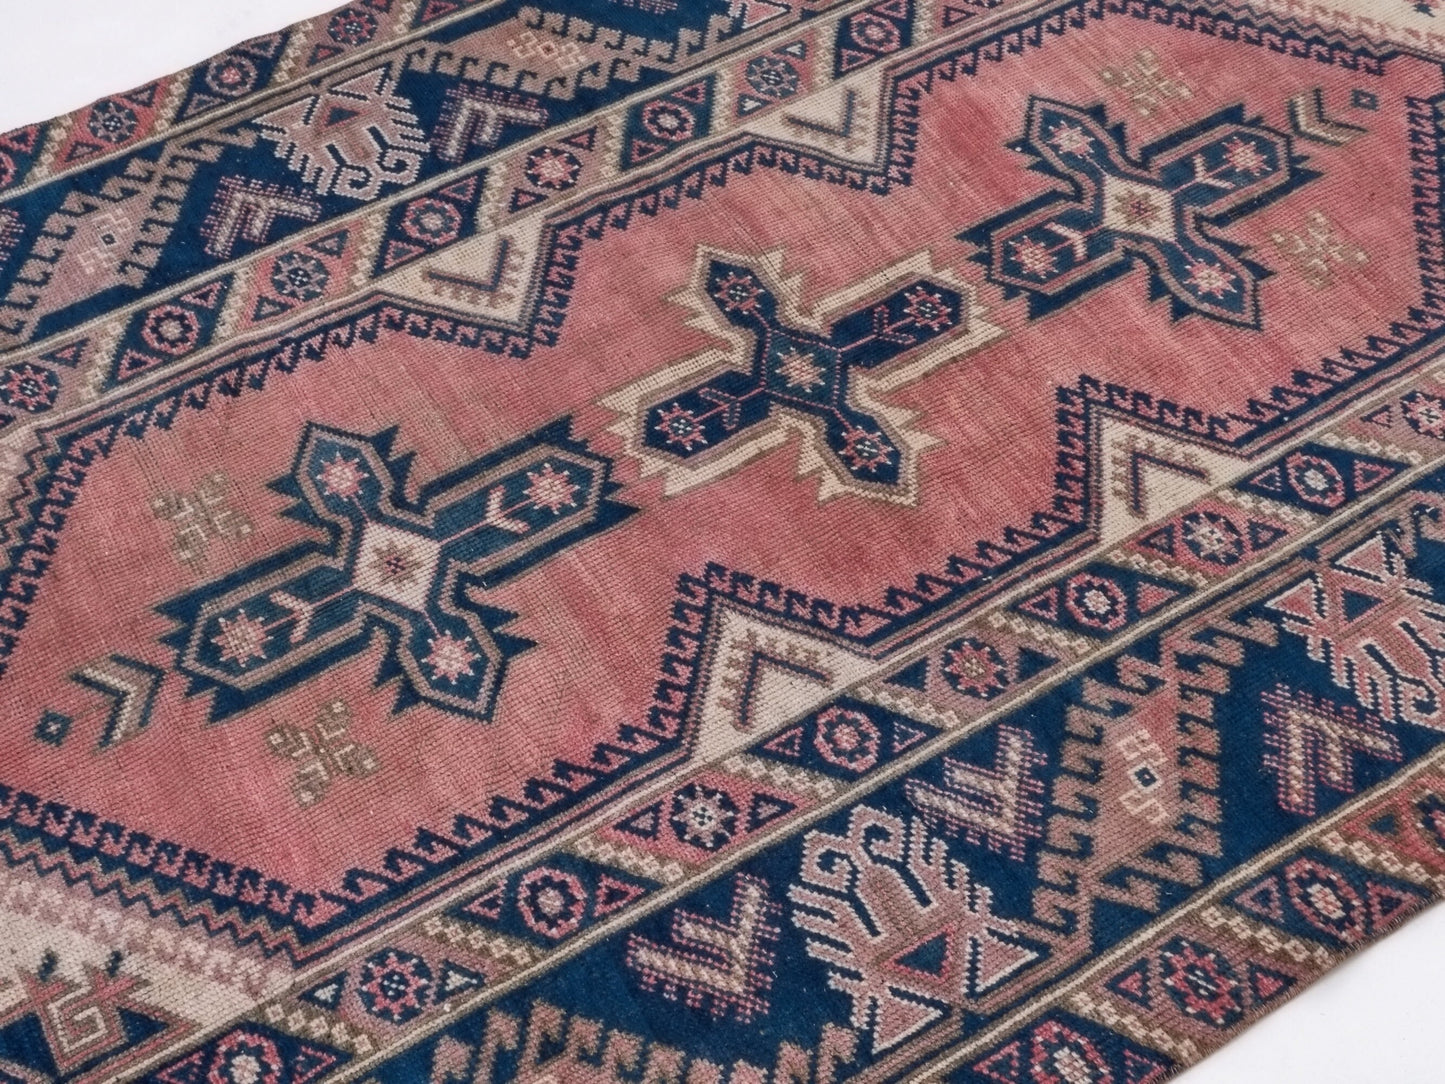 Geometric Turkish rug, Anatolia Rug, Oushak Rug, Vintage Rug, Unique rug, Wool rug, Handmade rug, Small rug 4x6, Entryway rug, 10034